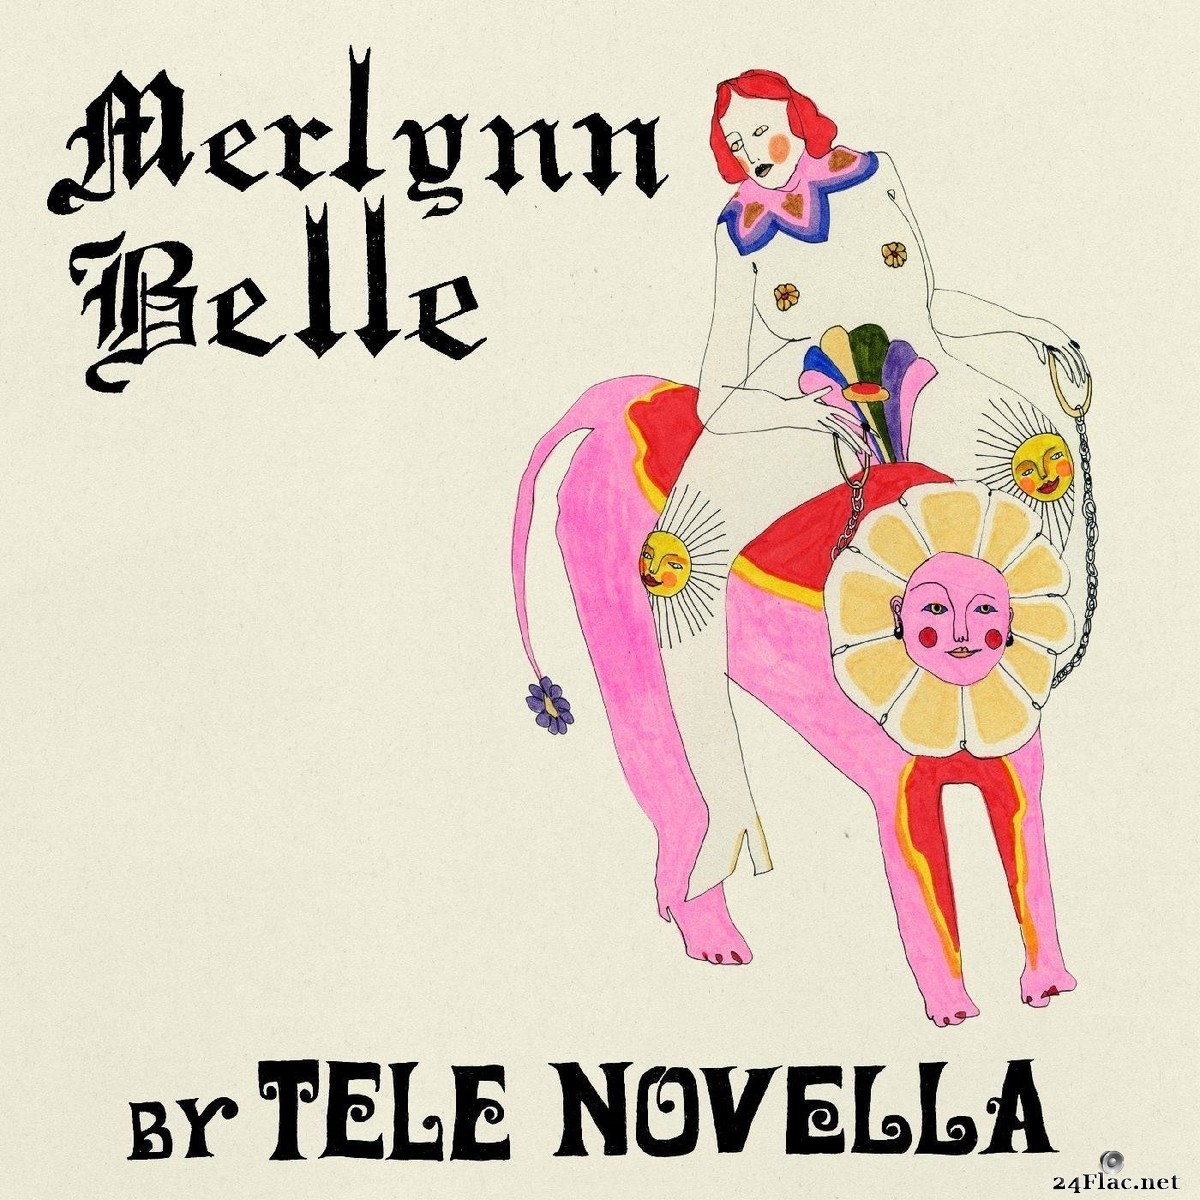 Tele Novella - Merlynn Belle (2021) FLAC + Hi-Res